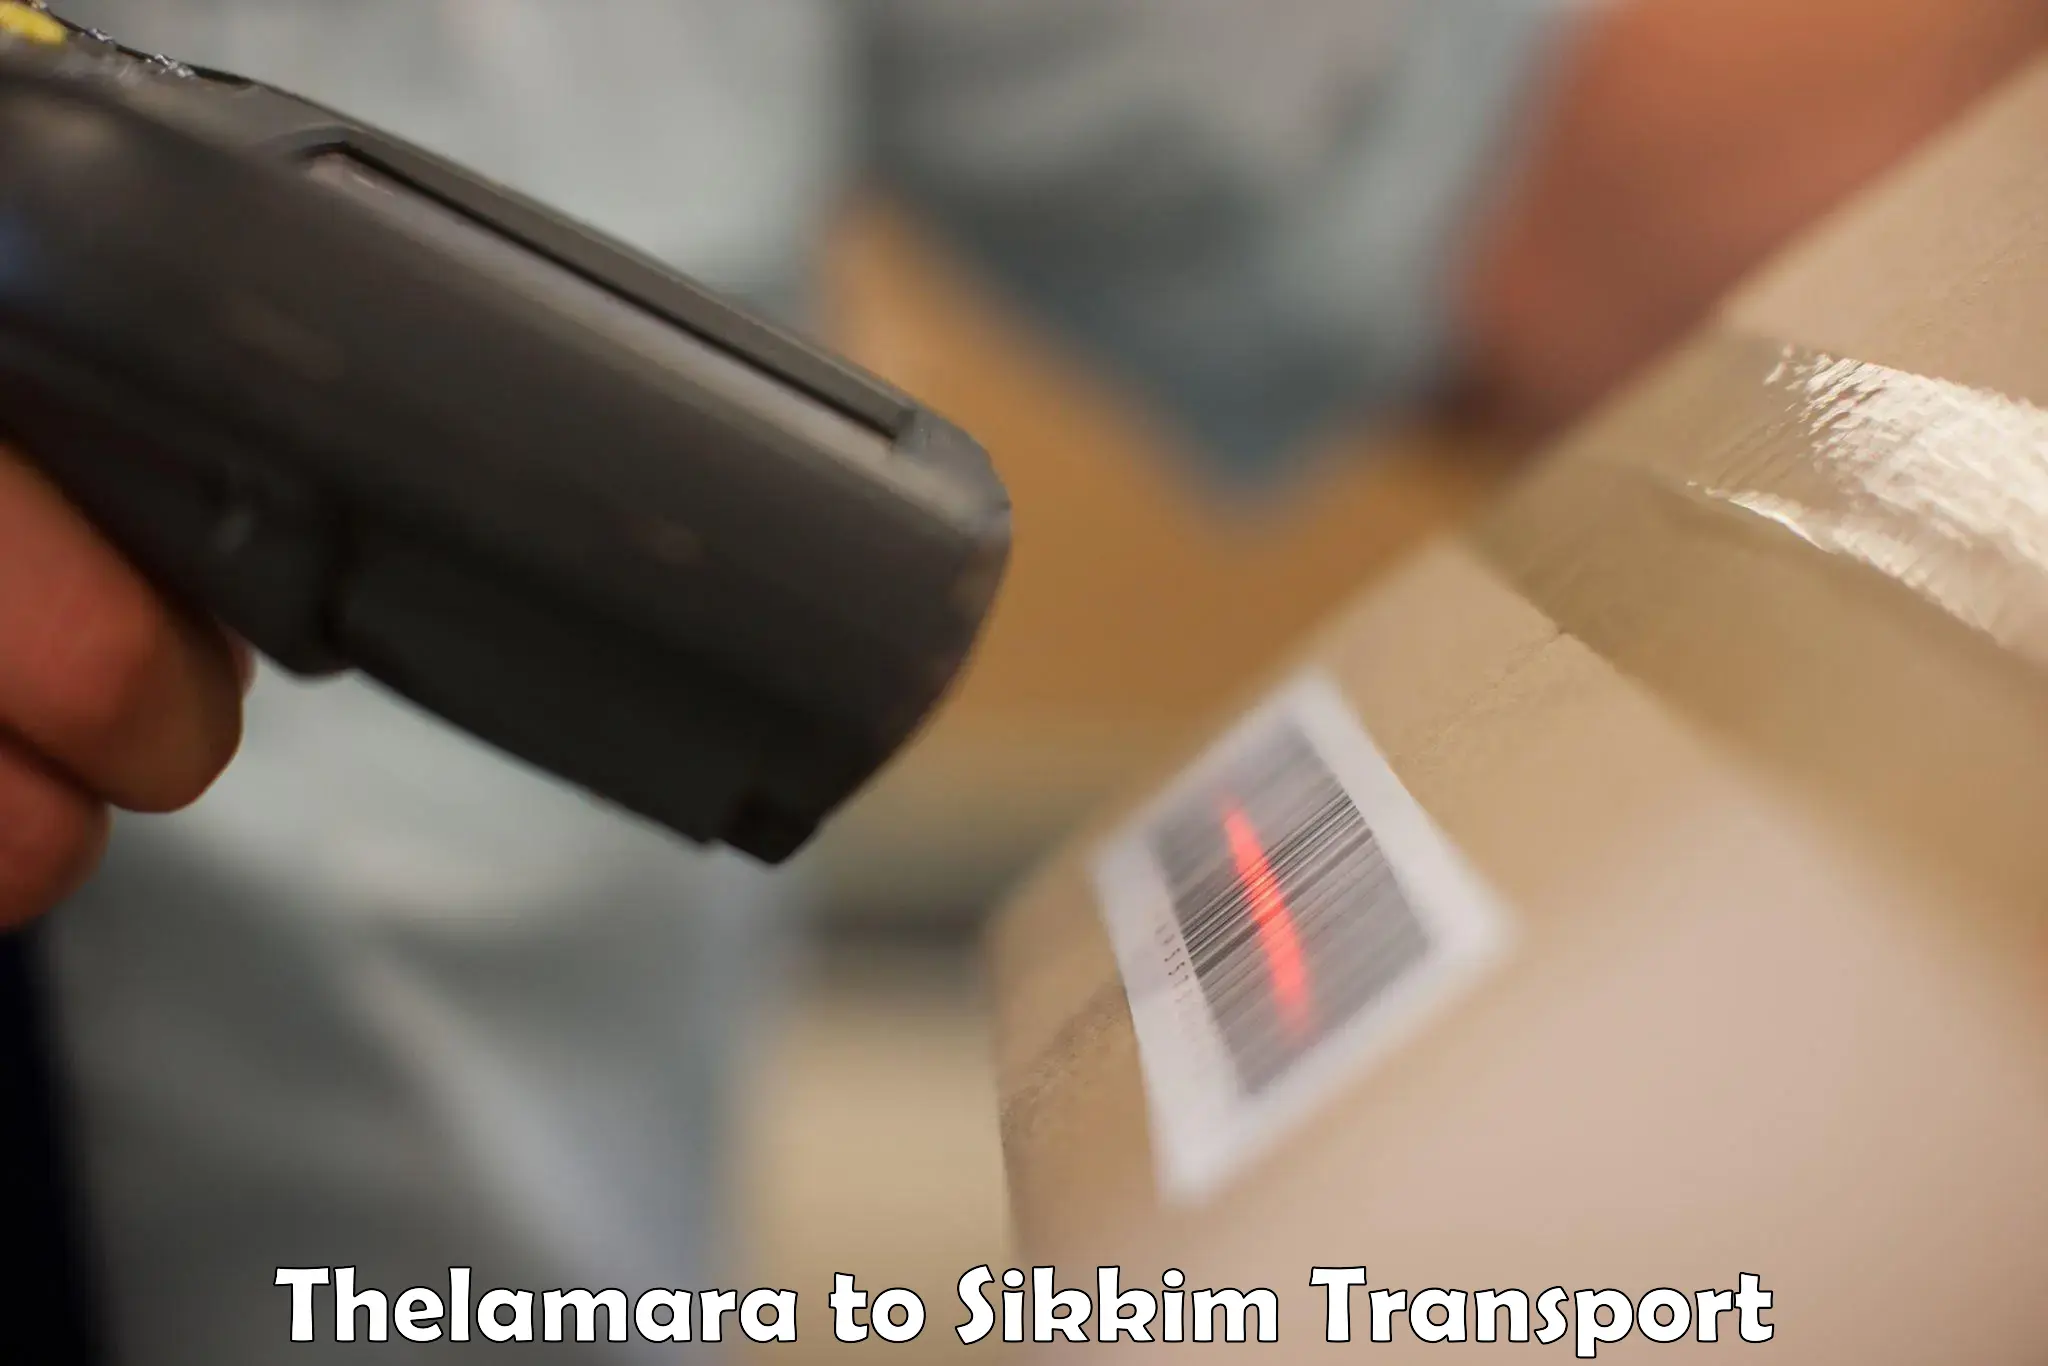 Online transport service Thelamara to Pelling